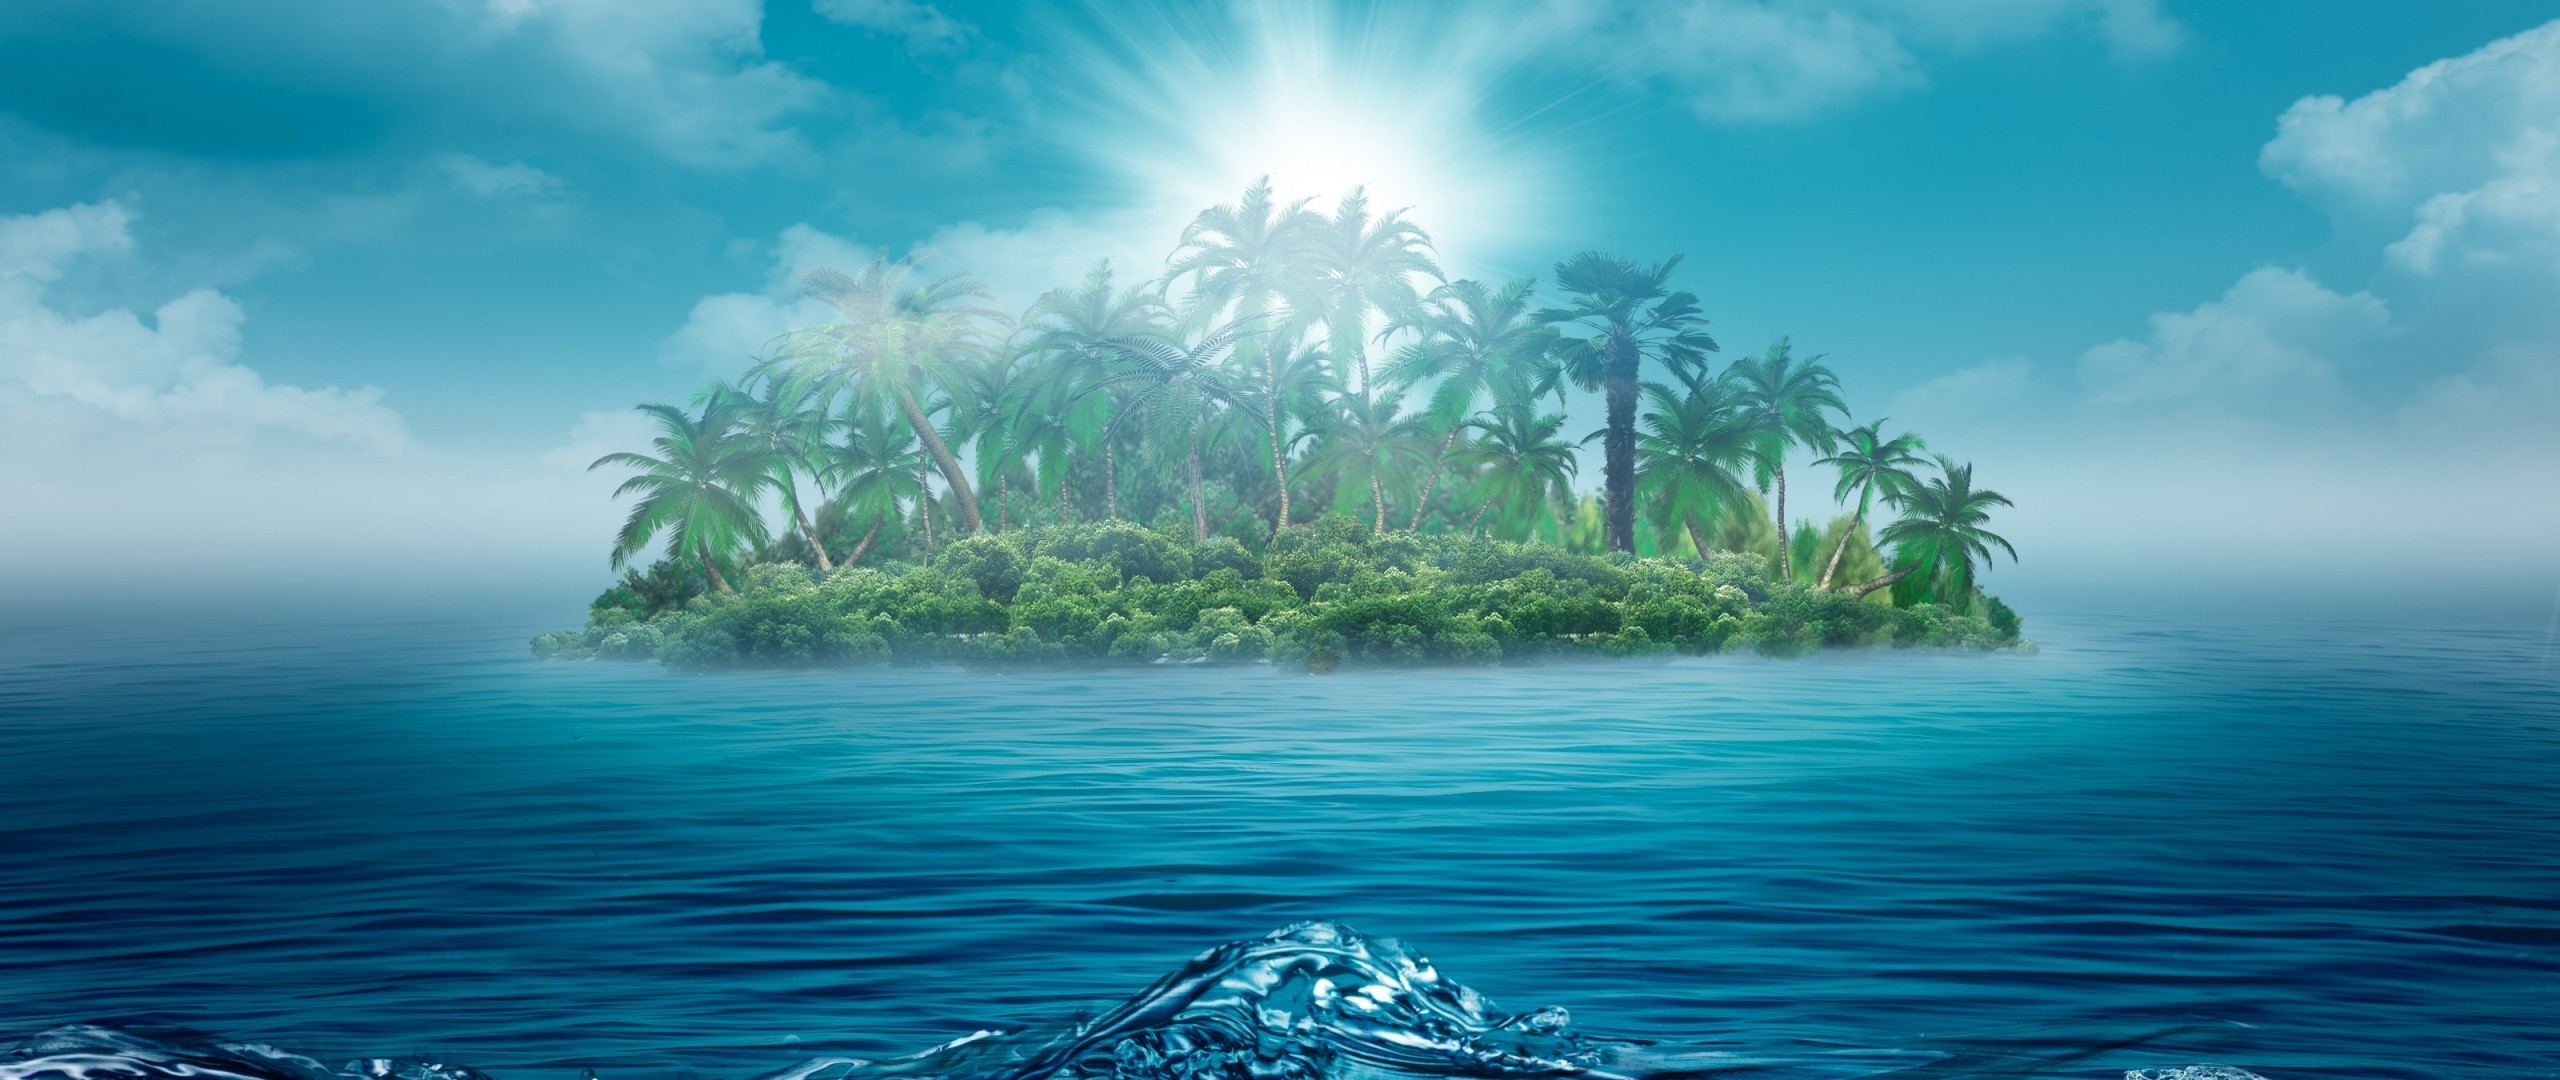 General 2560x1080 fantasy art island sea palm trees digital art ultrawide water clouds trees sunlight